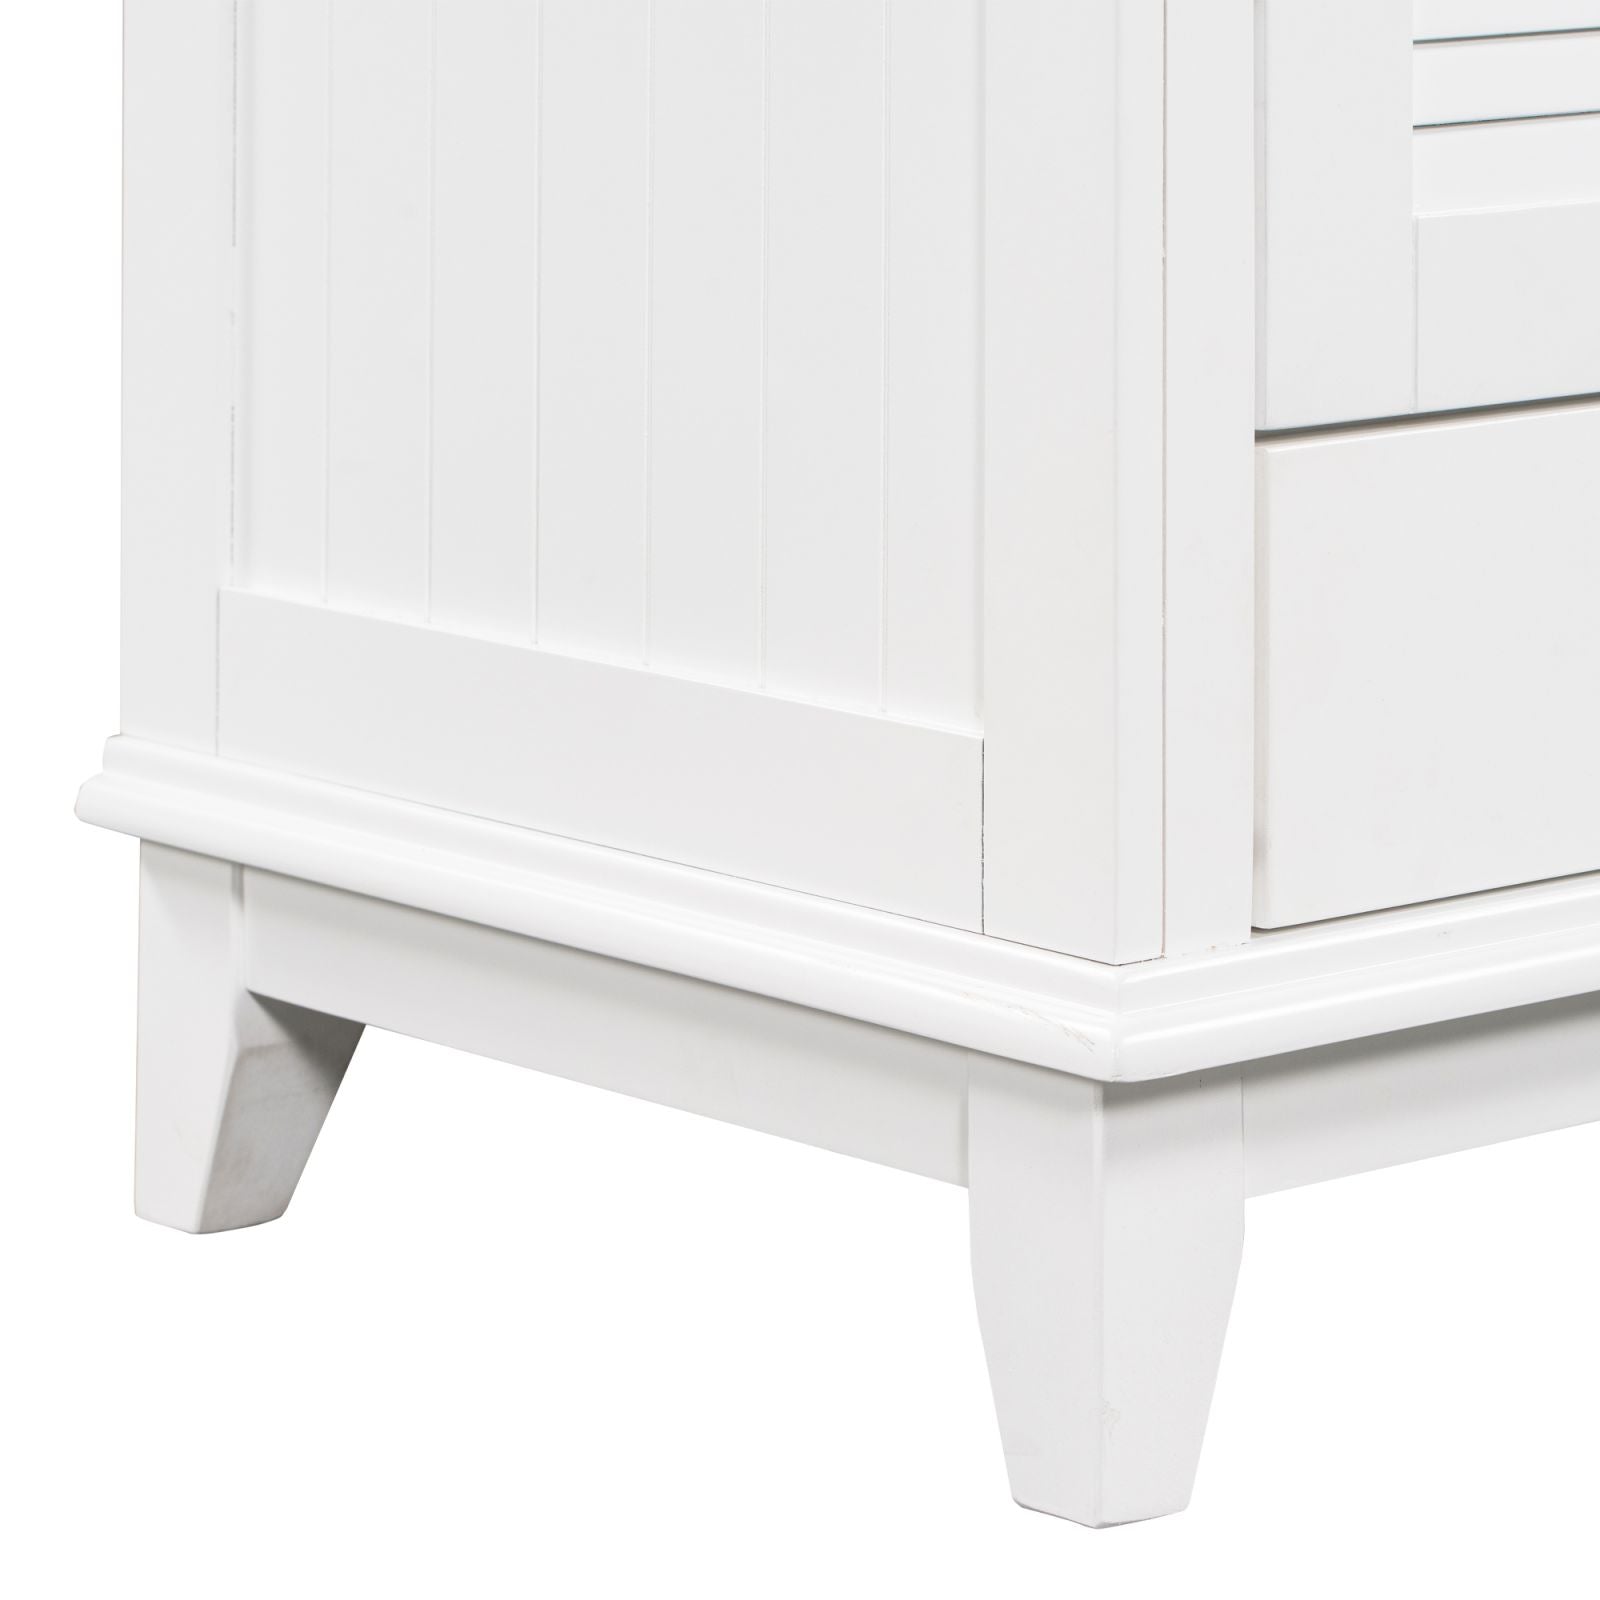 Freestanding cabinet legs